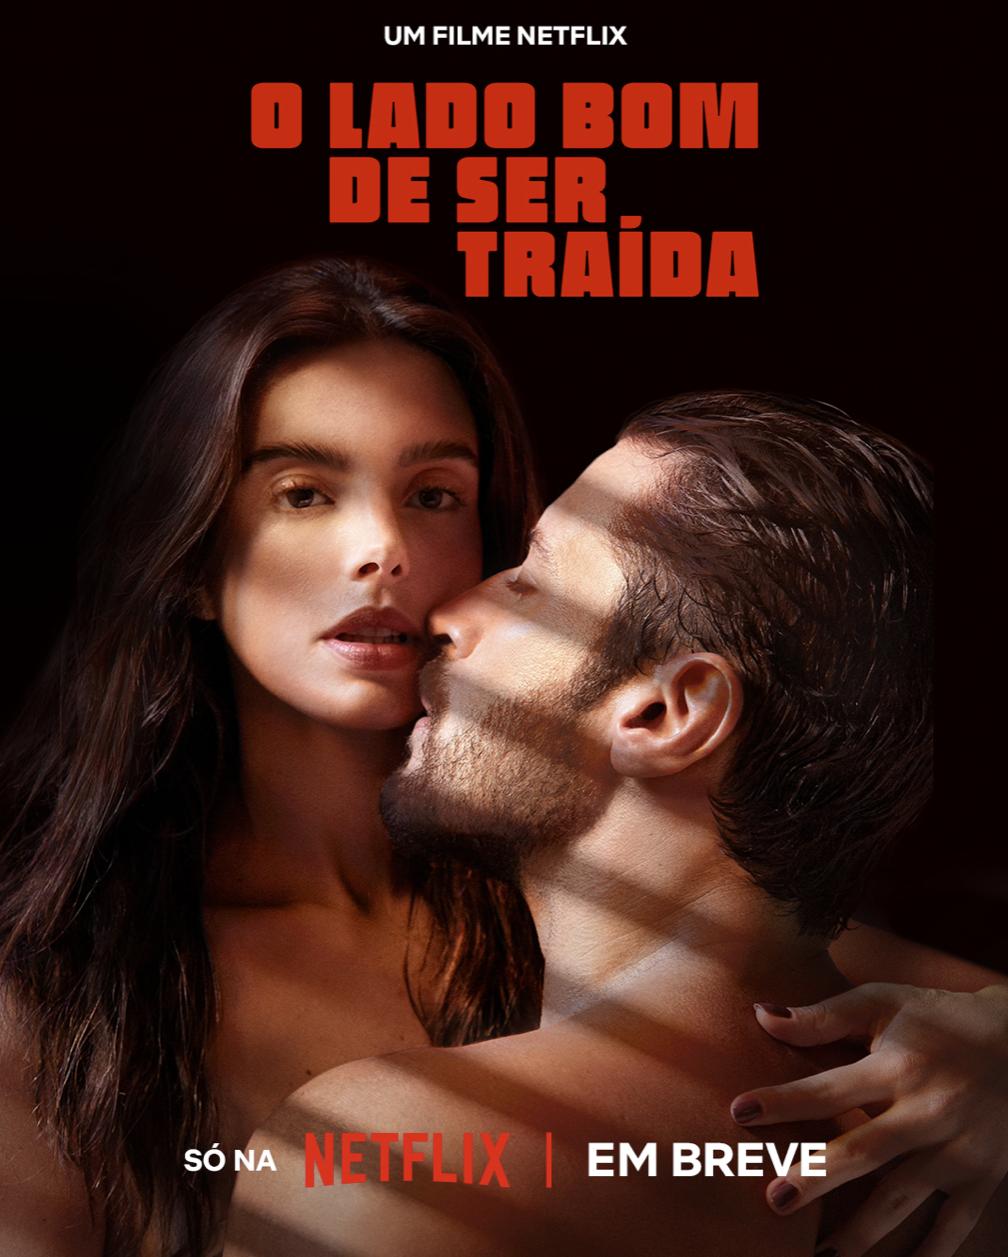 Burning Betrayal (October 25) - Netflix
Brazil brings us 